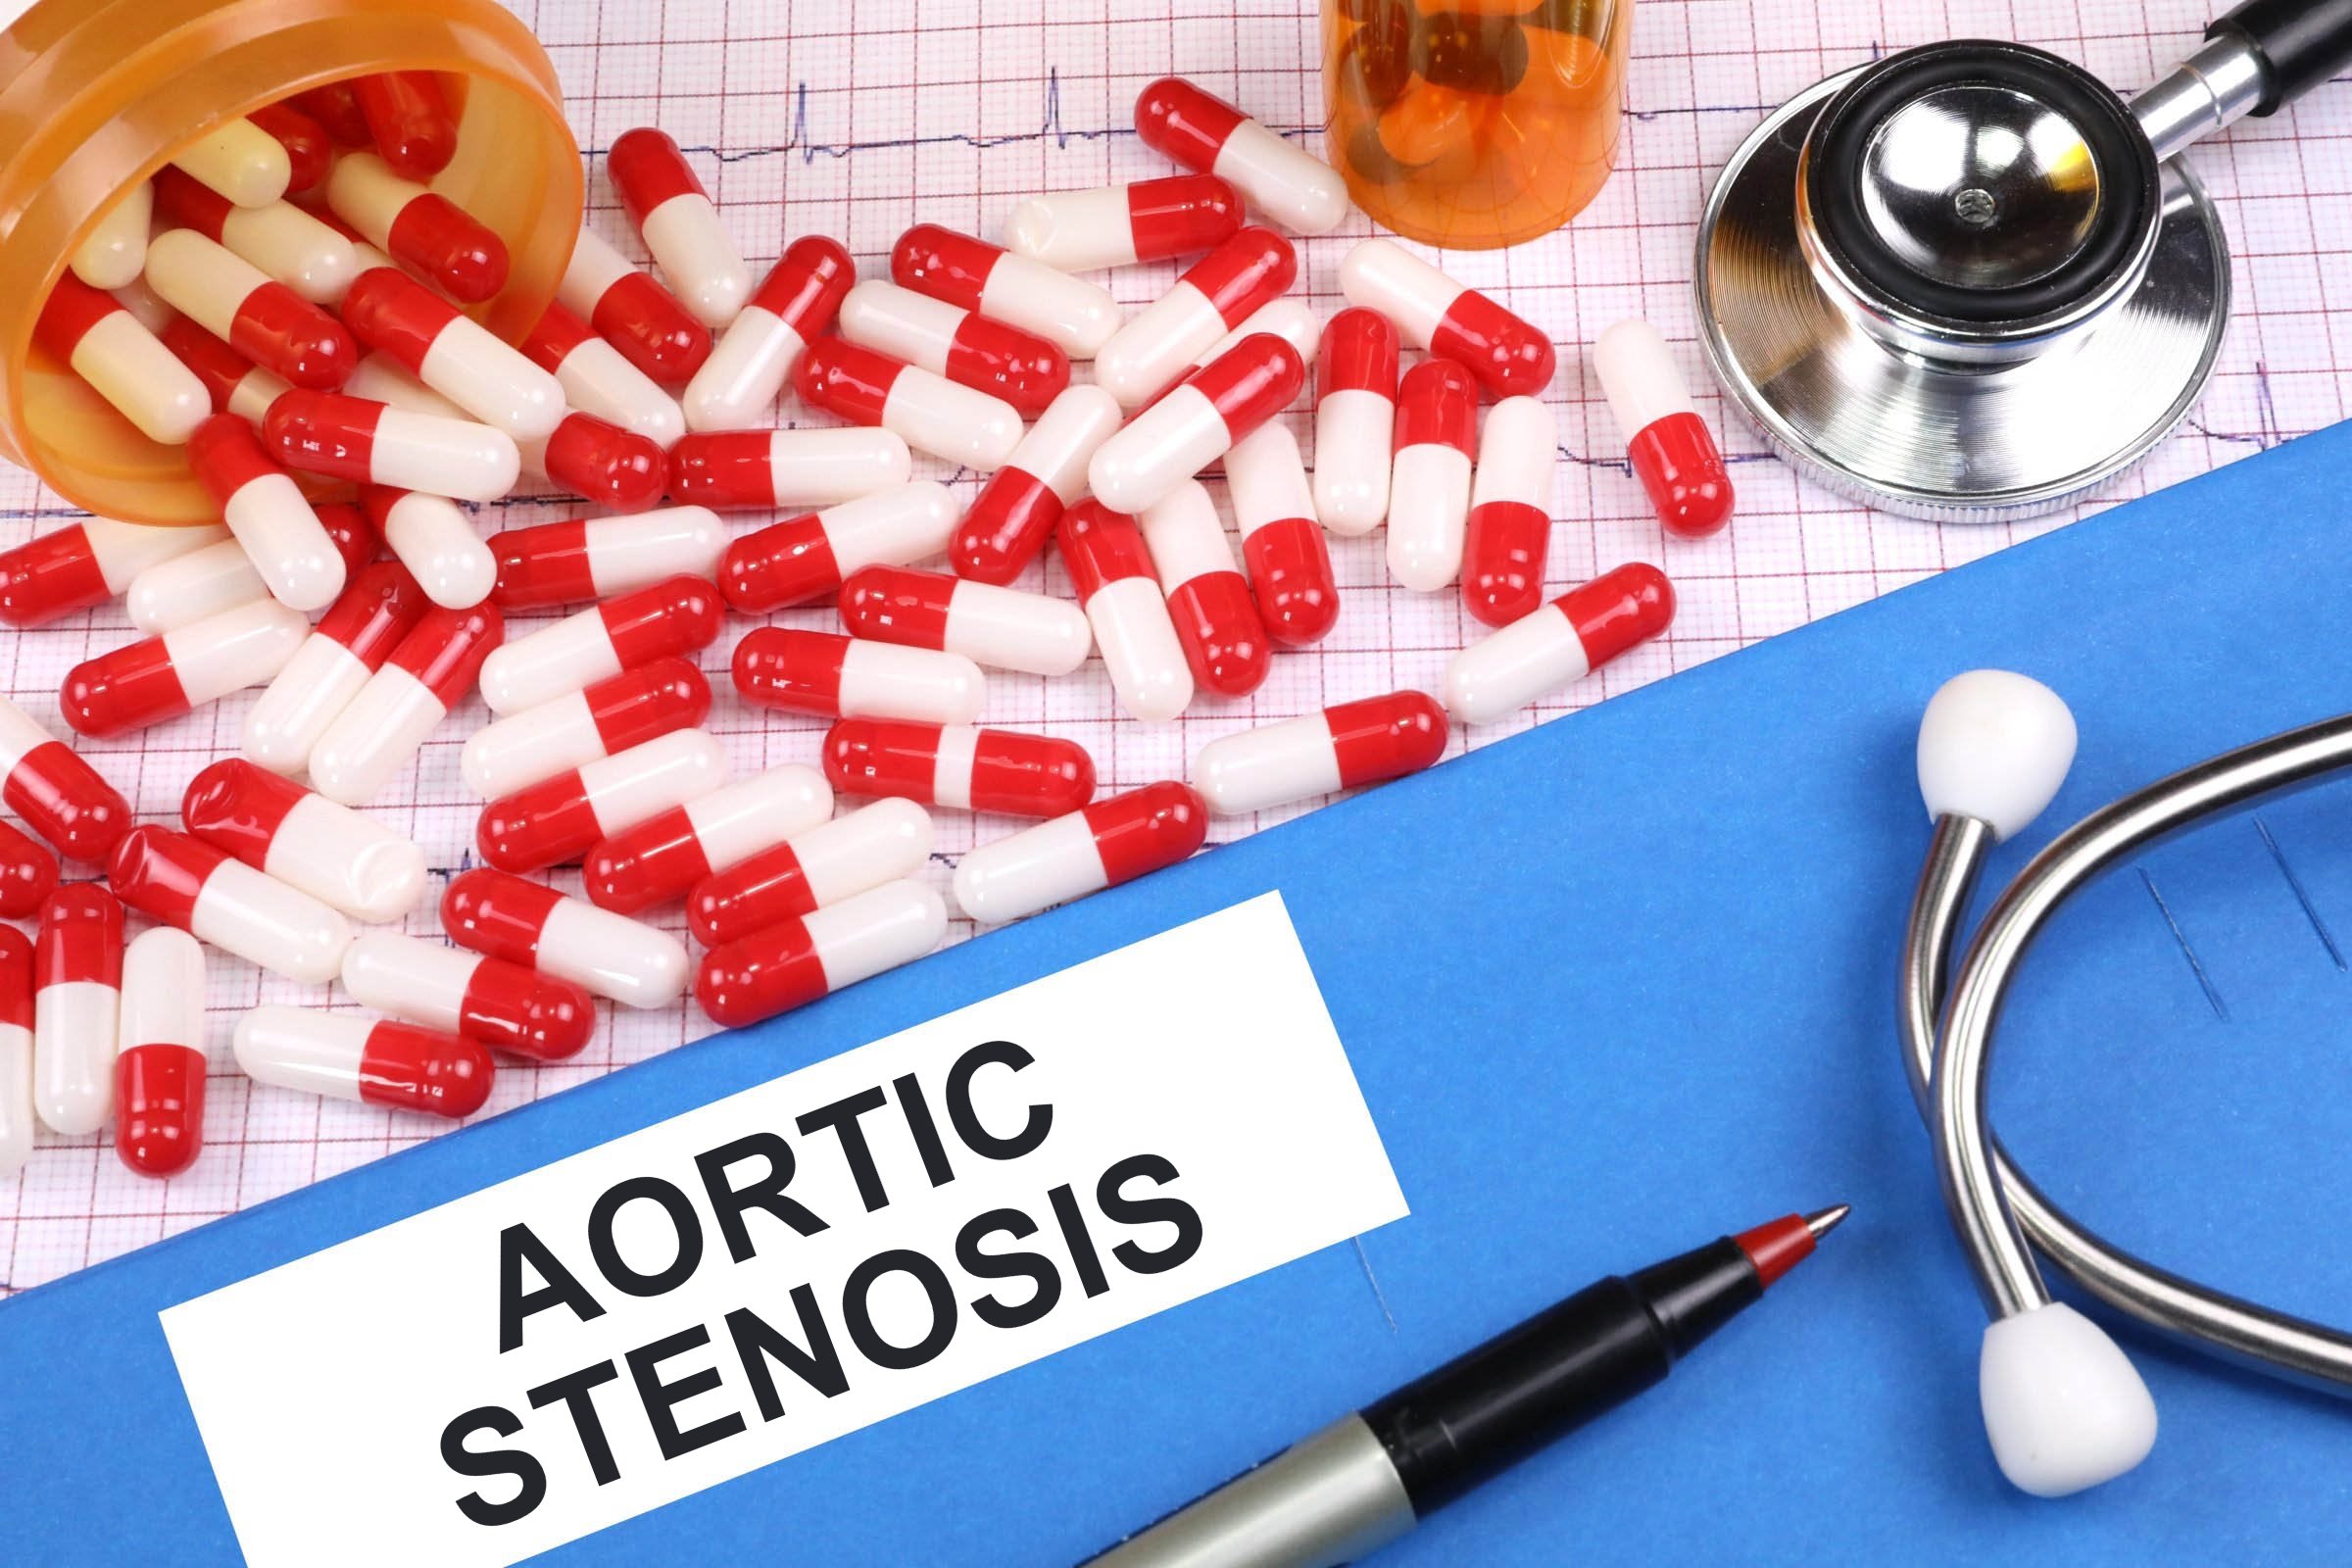 aortic stenosis